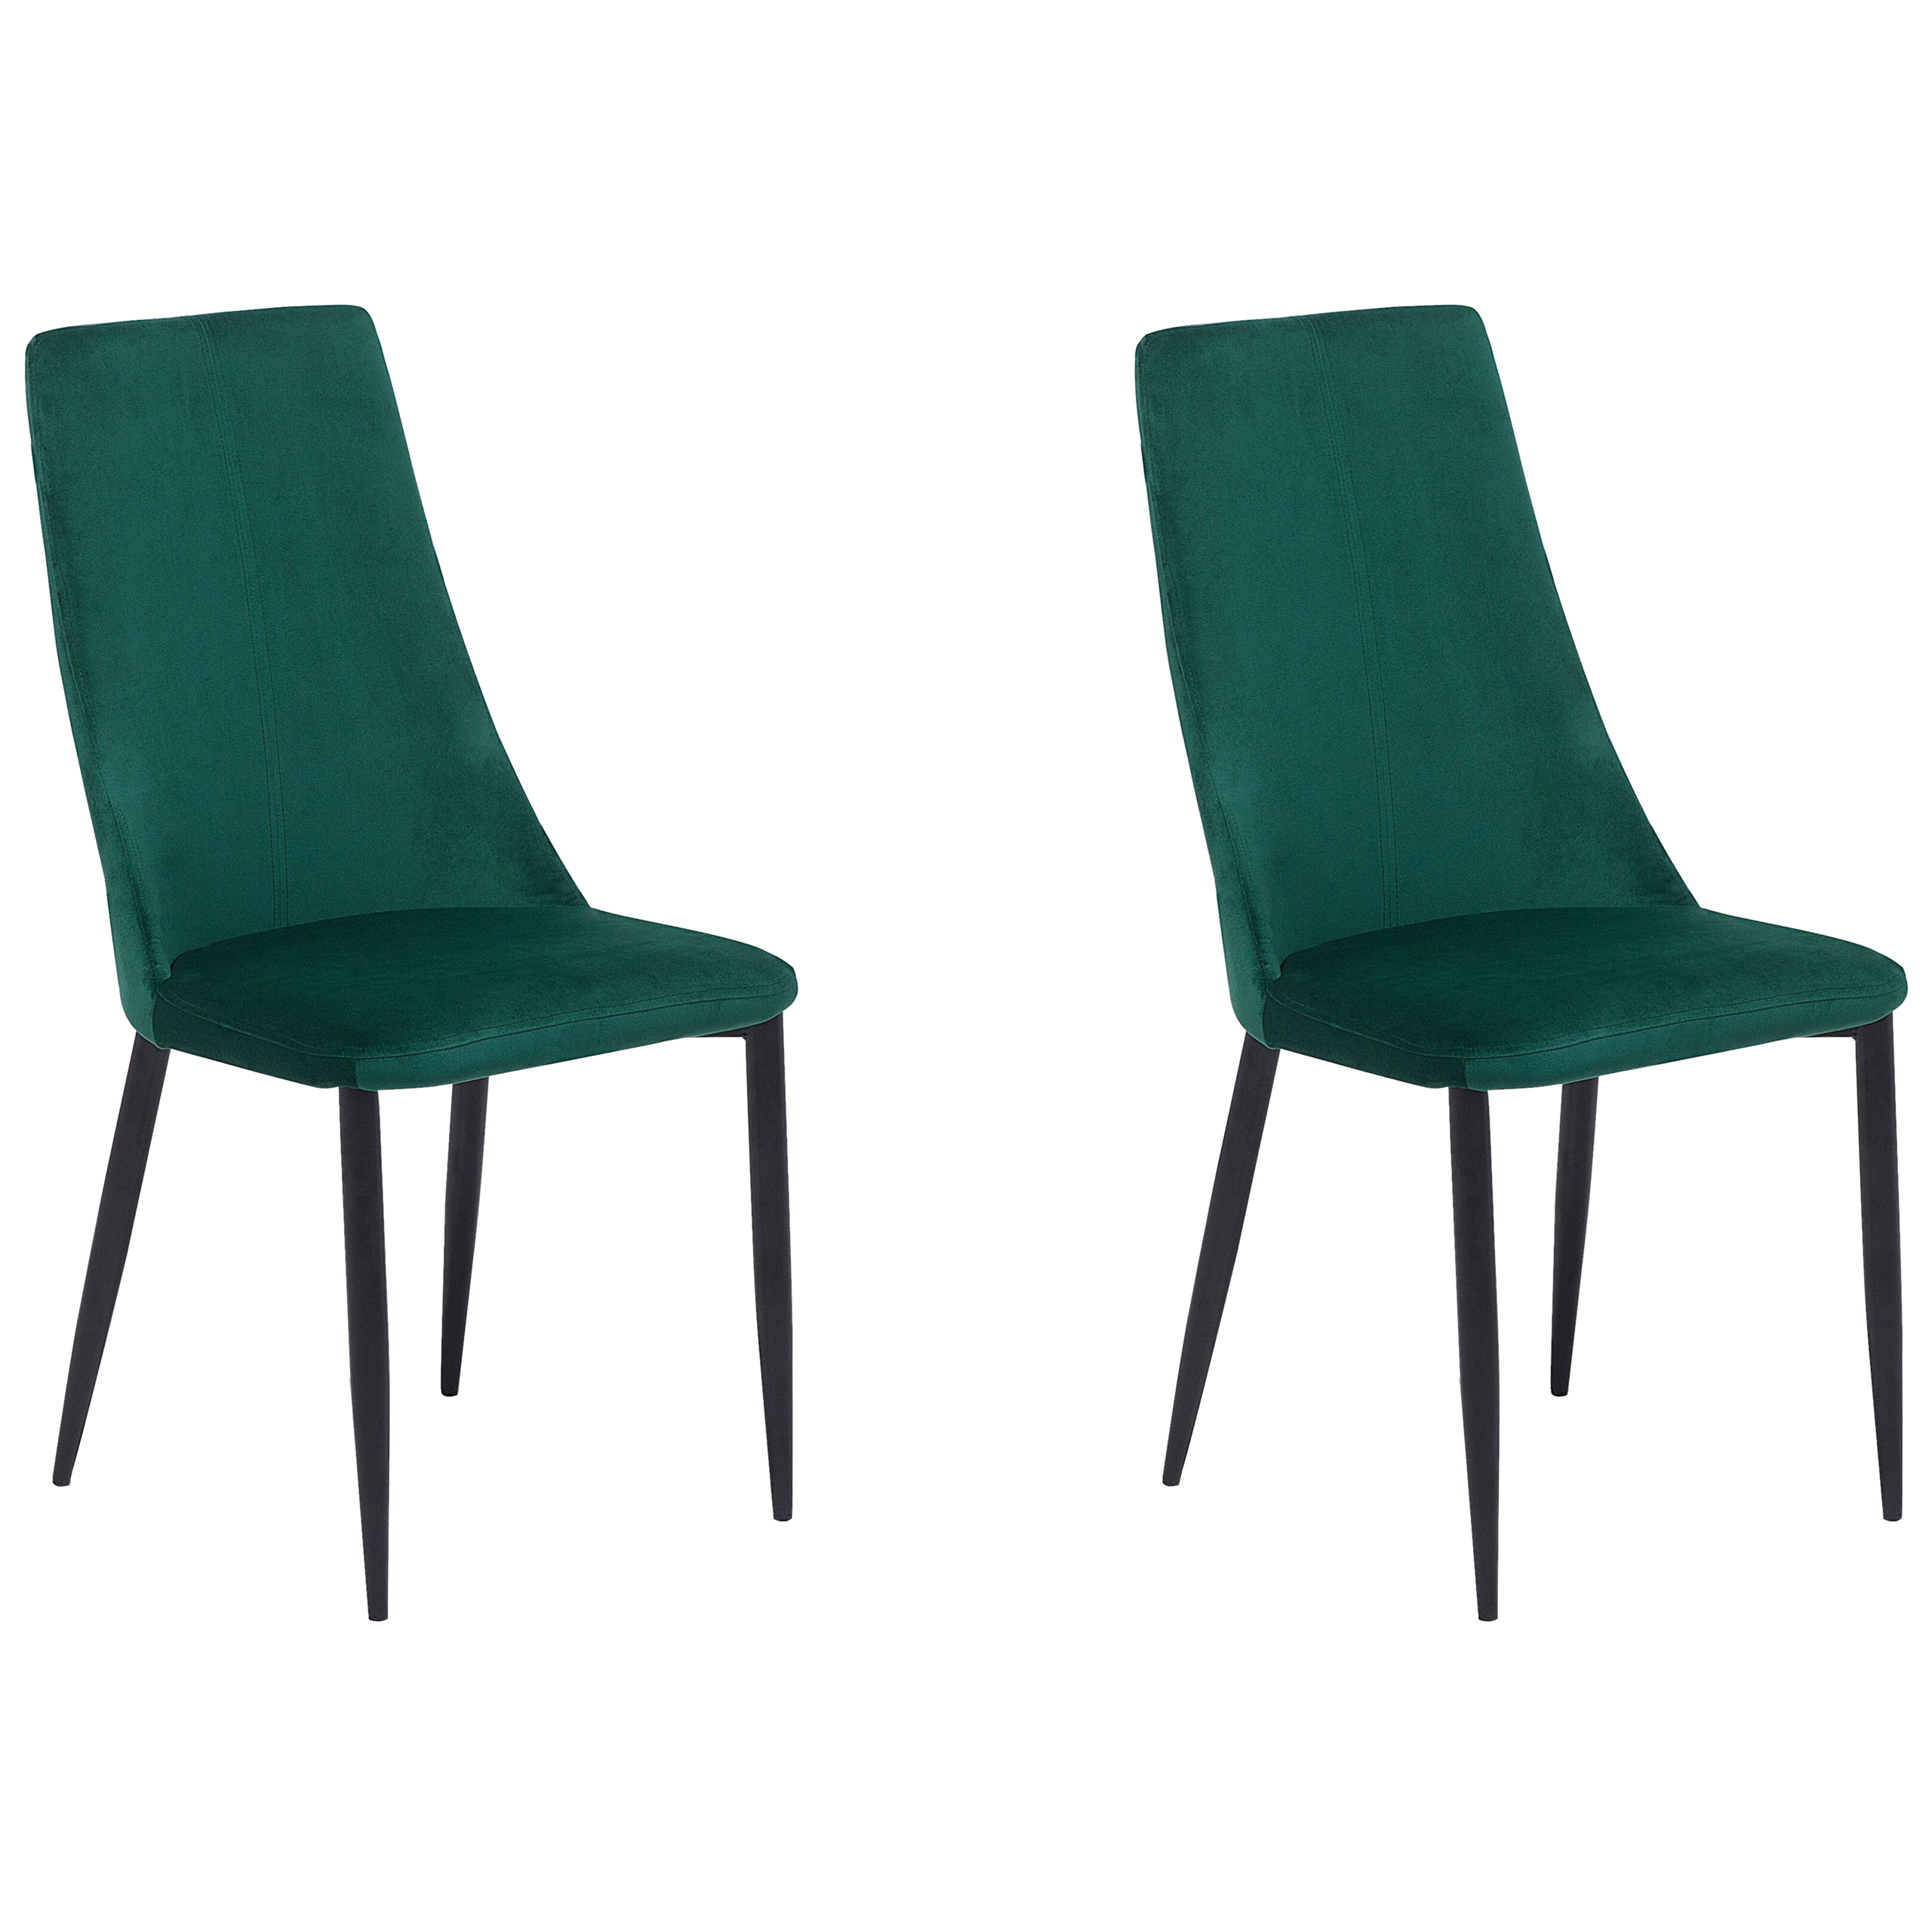 Beliani Set of 2 Dining Chairs Green Velvet Upholstered Seat High Back